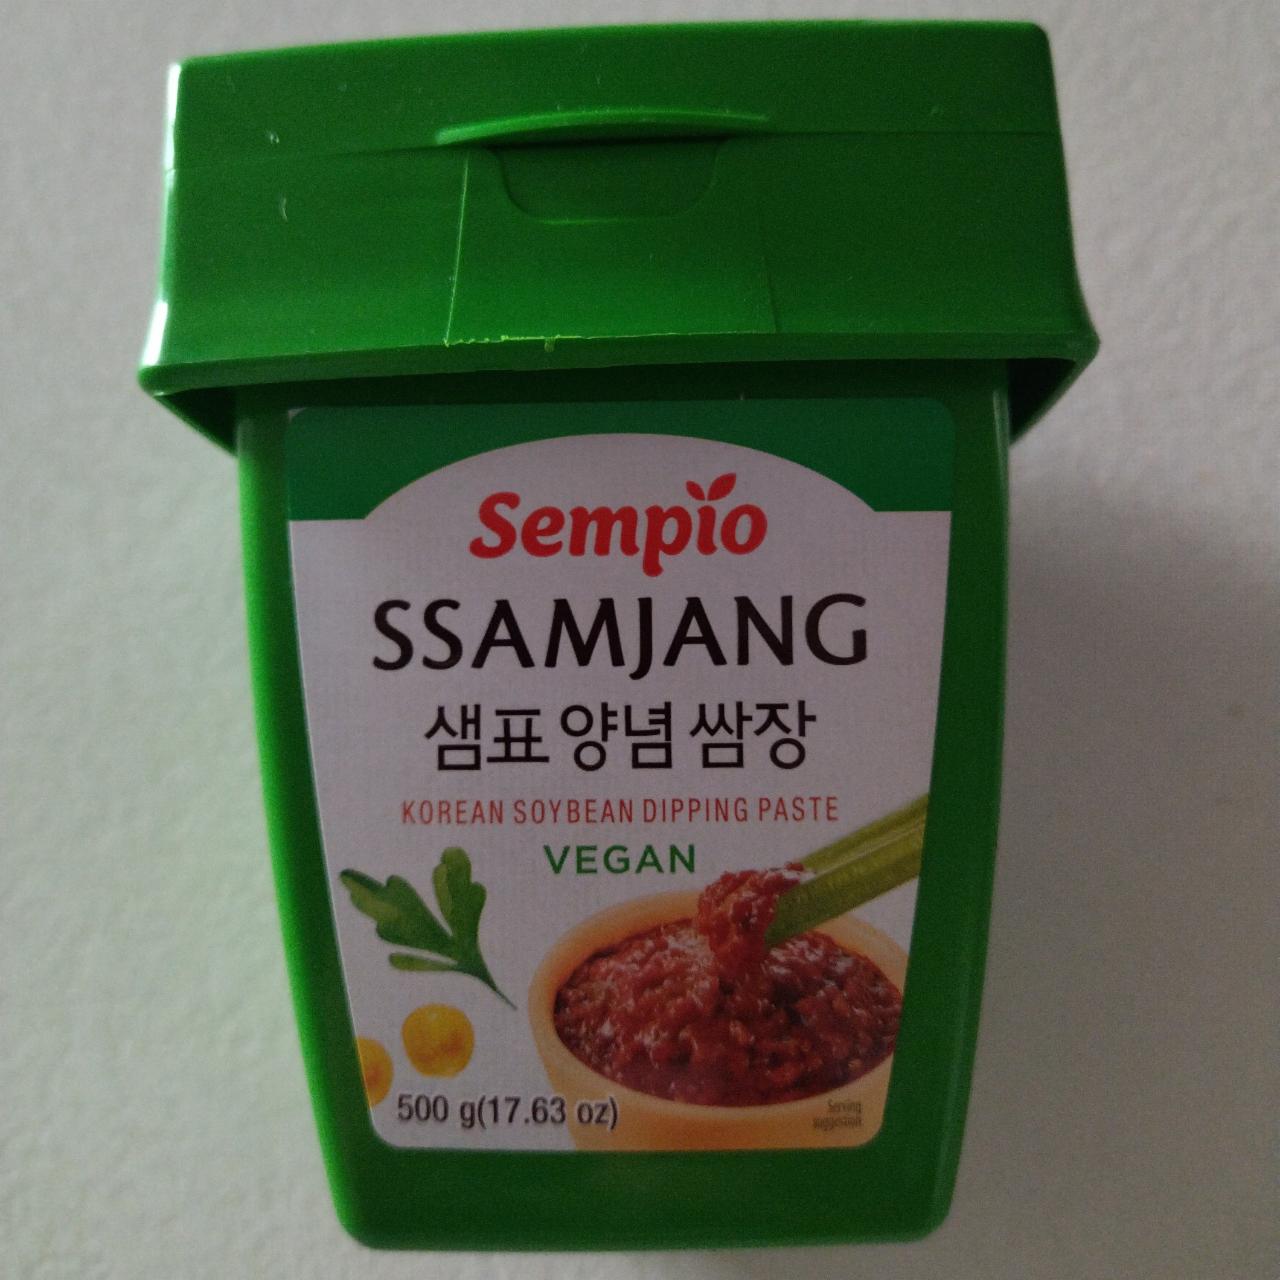 Fotografie - Ssamjang Korean Soybean Dipping Paste Vegan Sempio